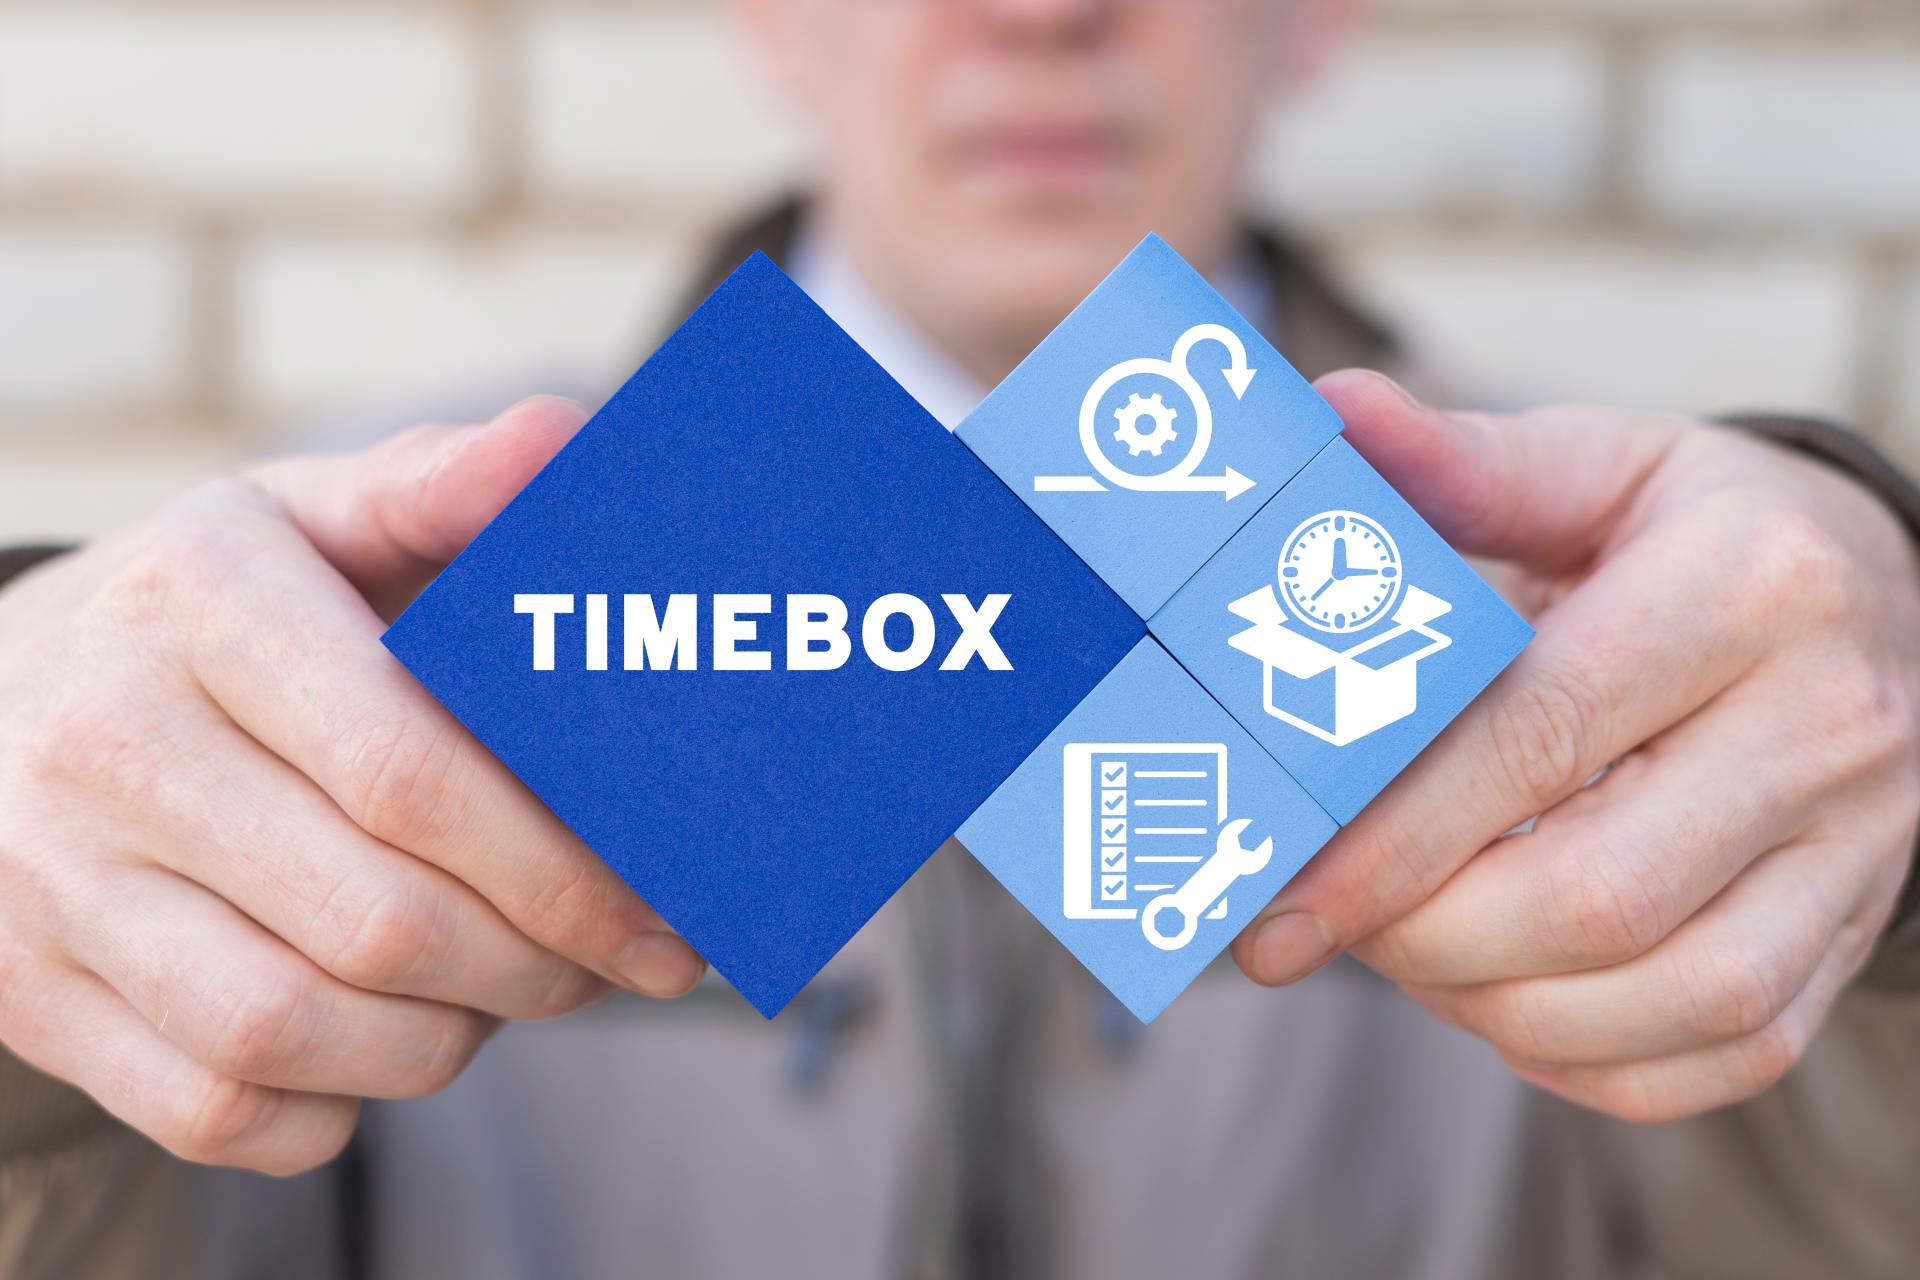 Zvijezda samopomoći Jay Shetty kune se u 'timeboxing' metodu upravljanja vremenom